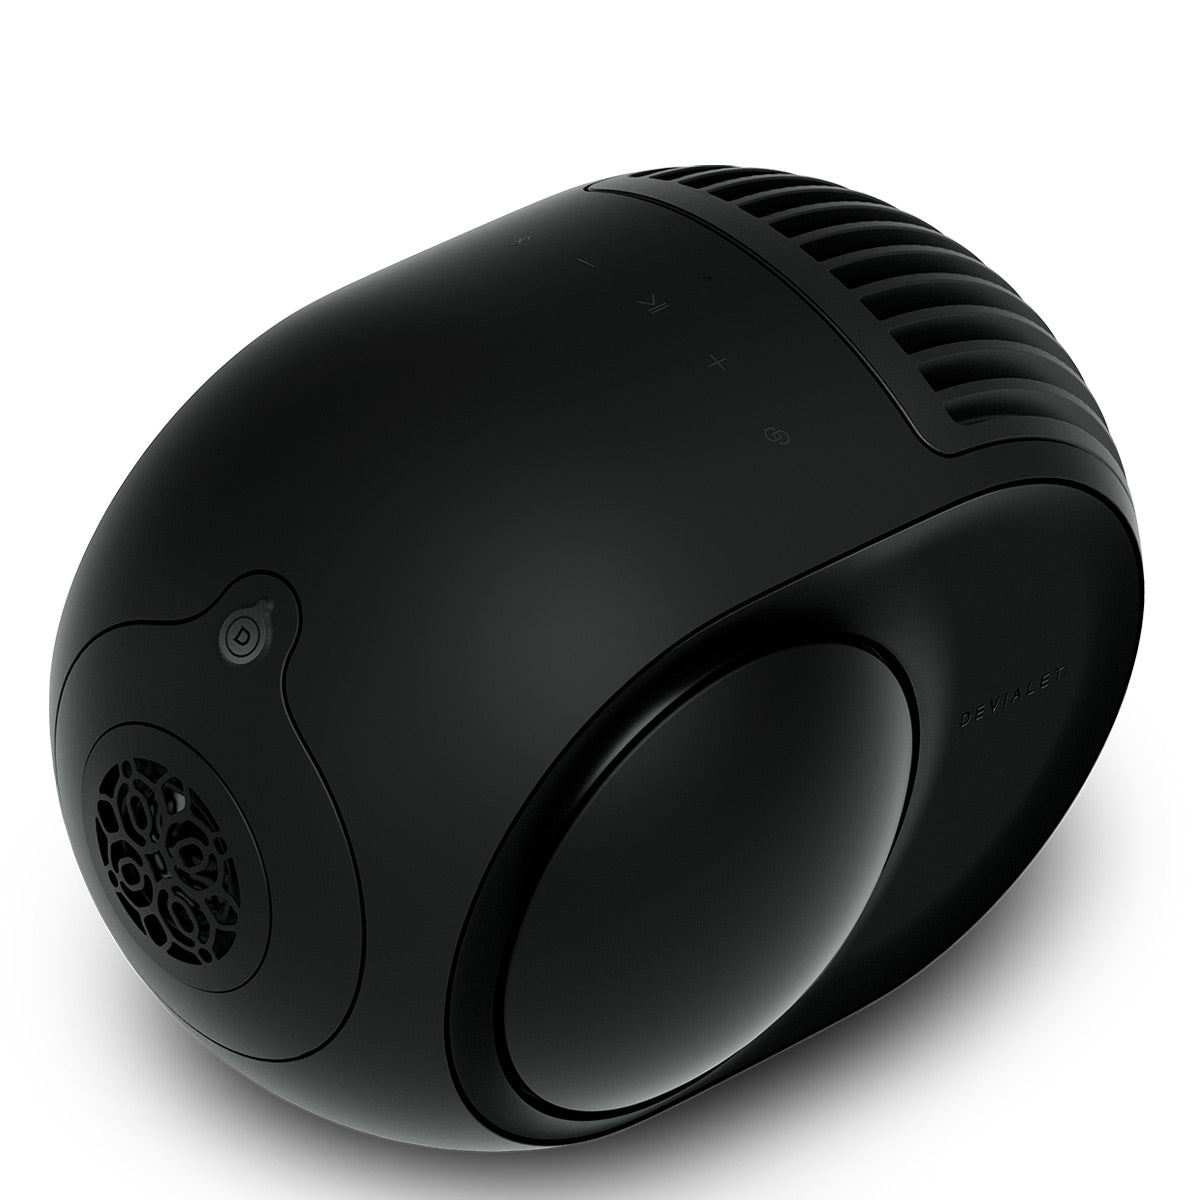 Devialet Phantom II 98db Wireless Compact Speaker with Remote (Matte Black)